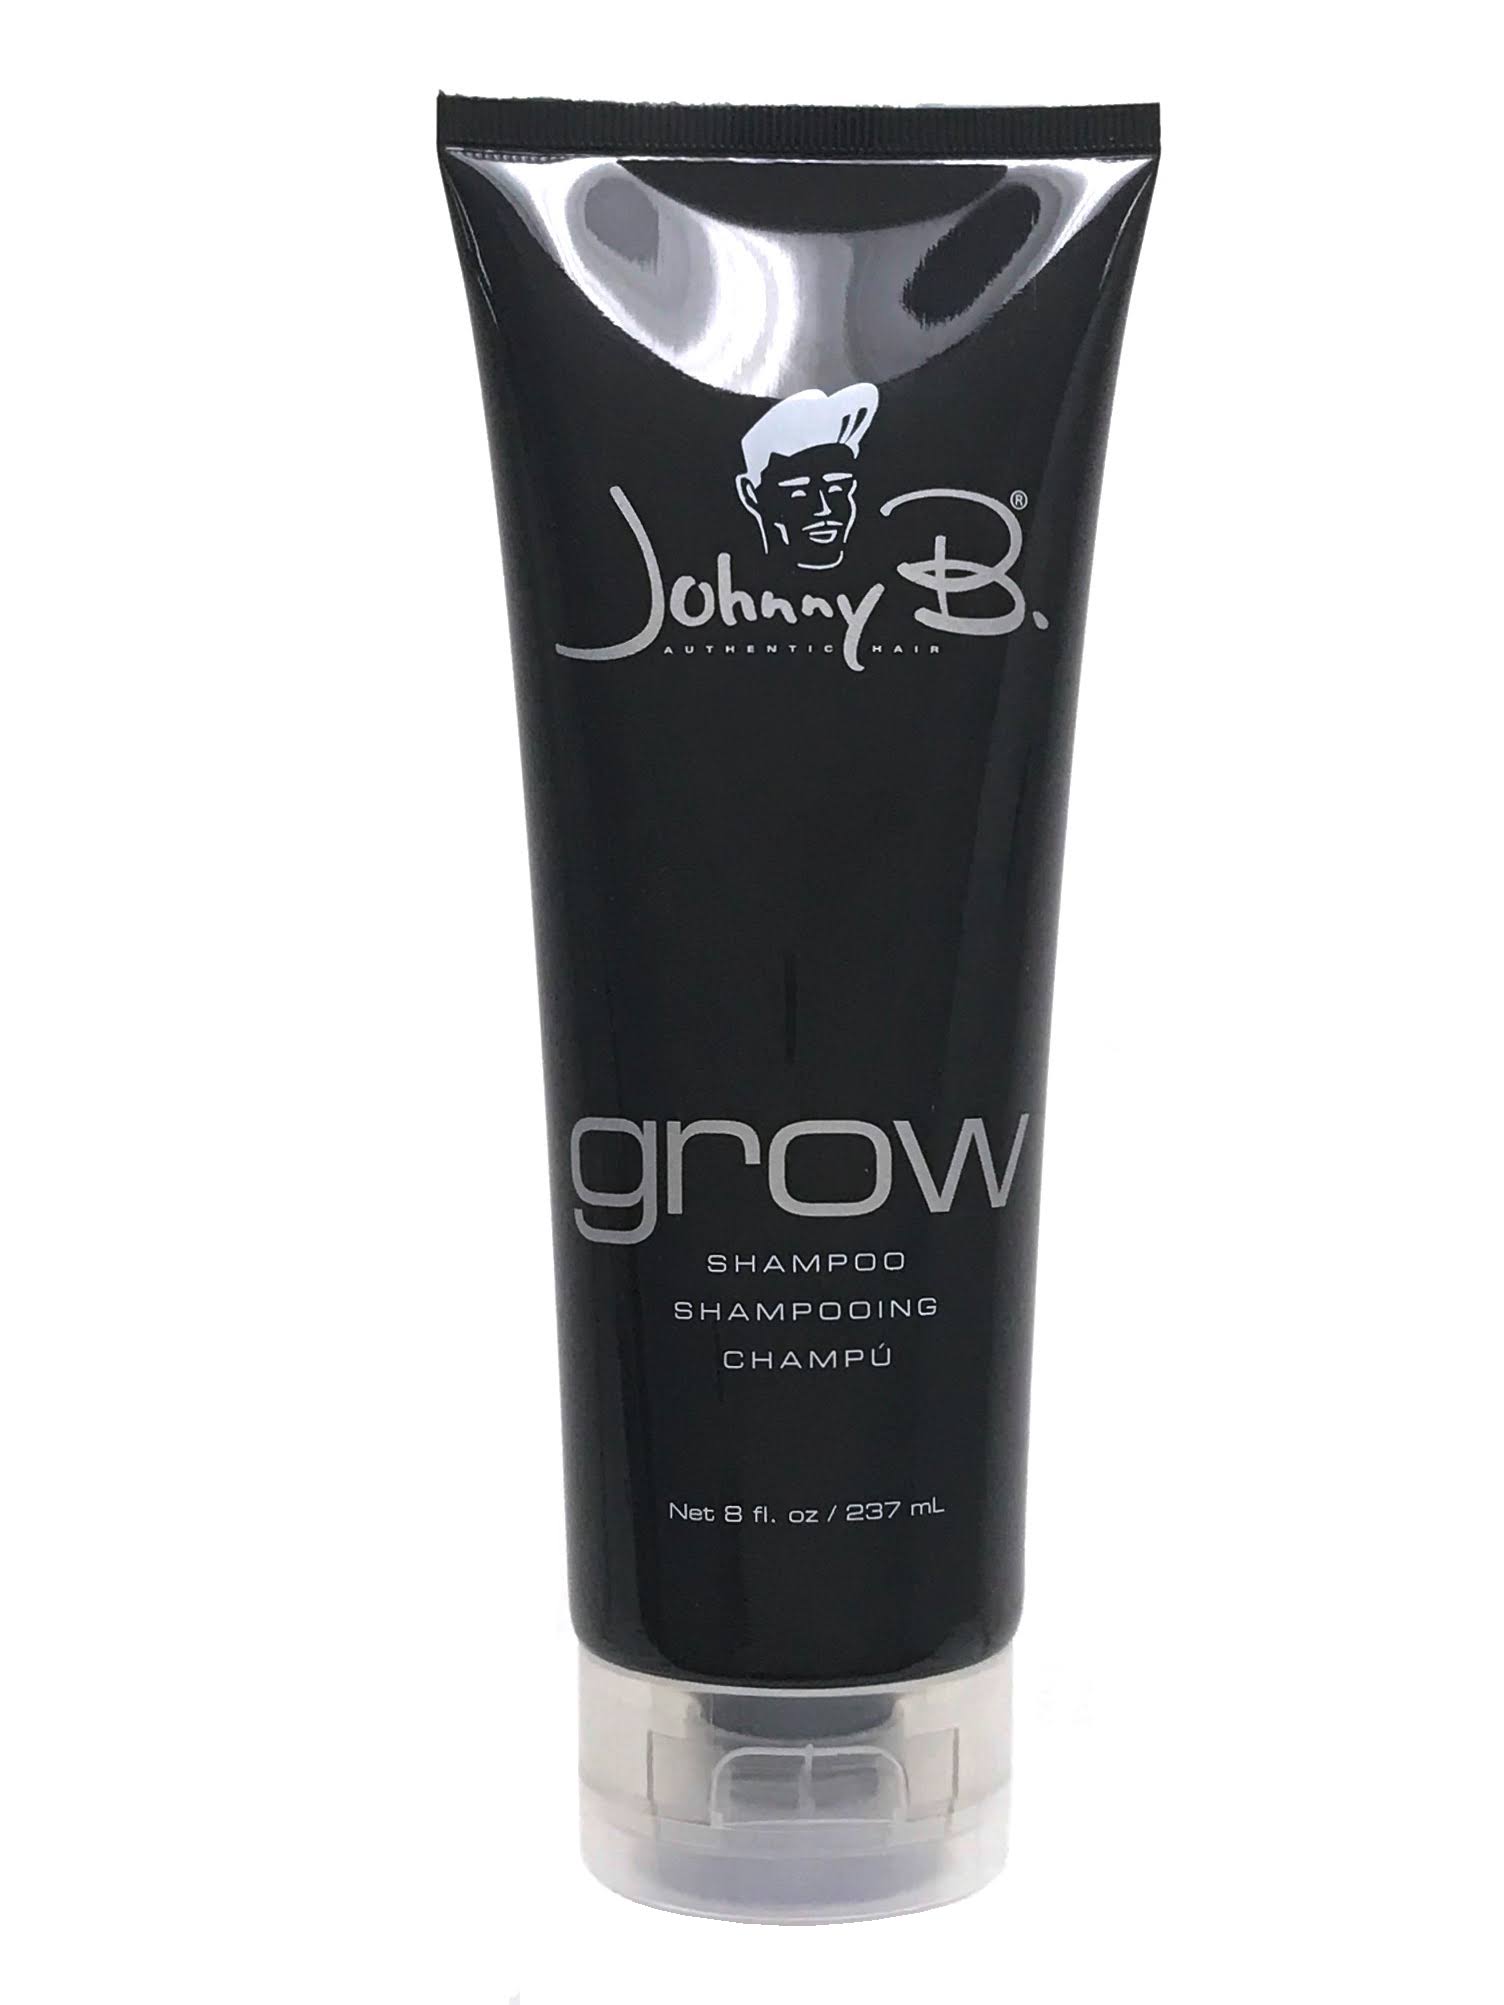 Johnny B Grow Shampoo - 8oz